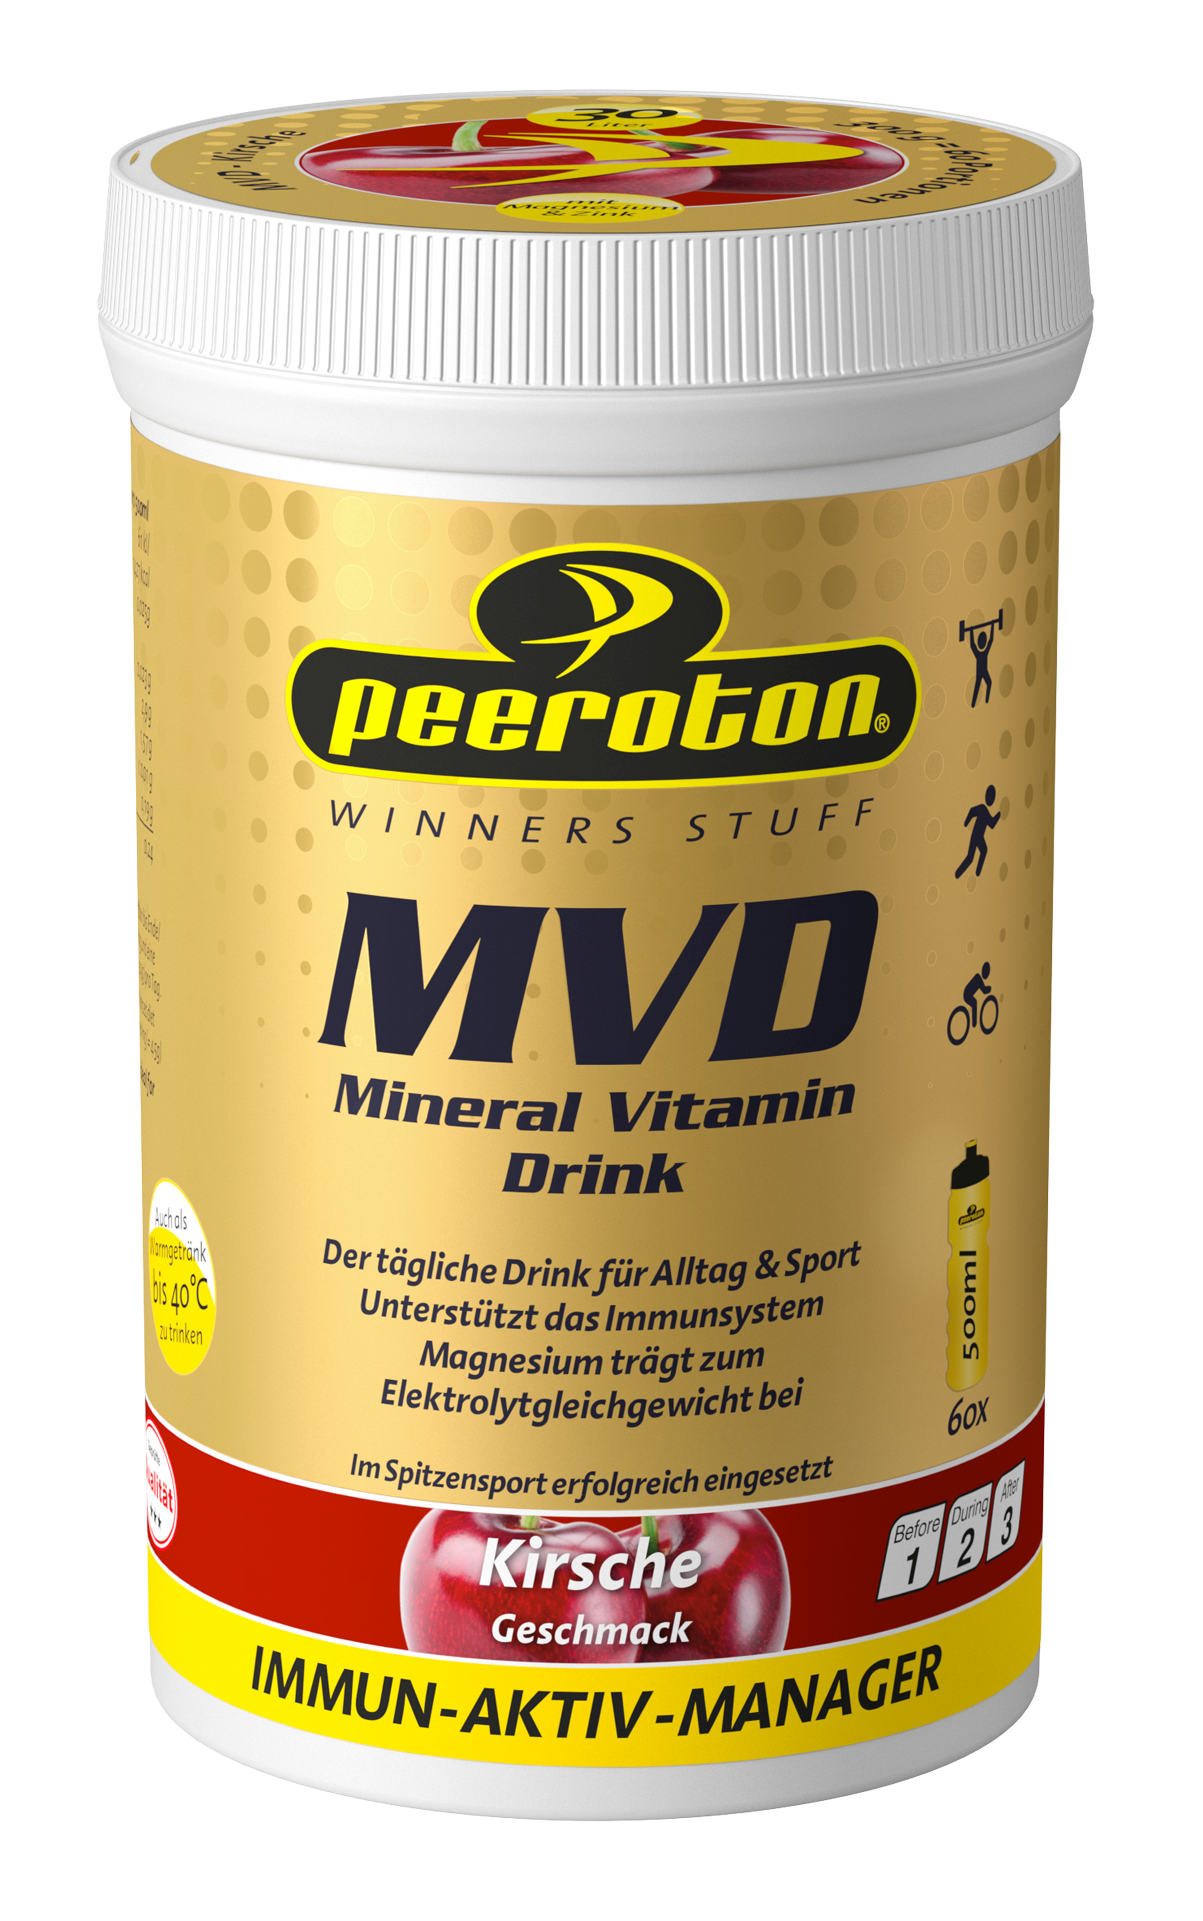 MVD - Mineral Vitamin Drink 300g